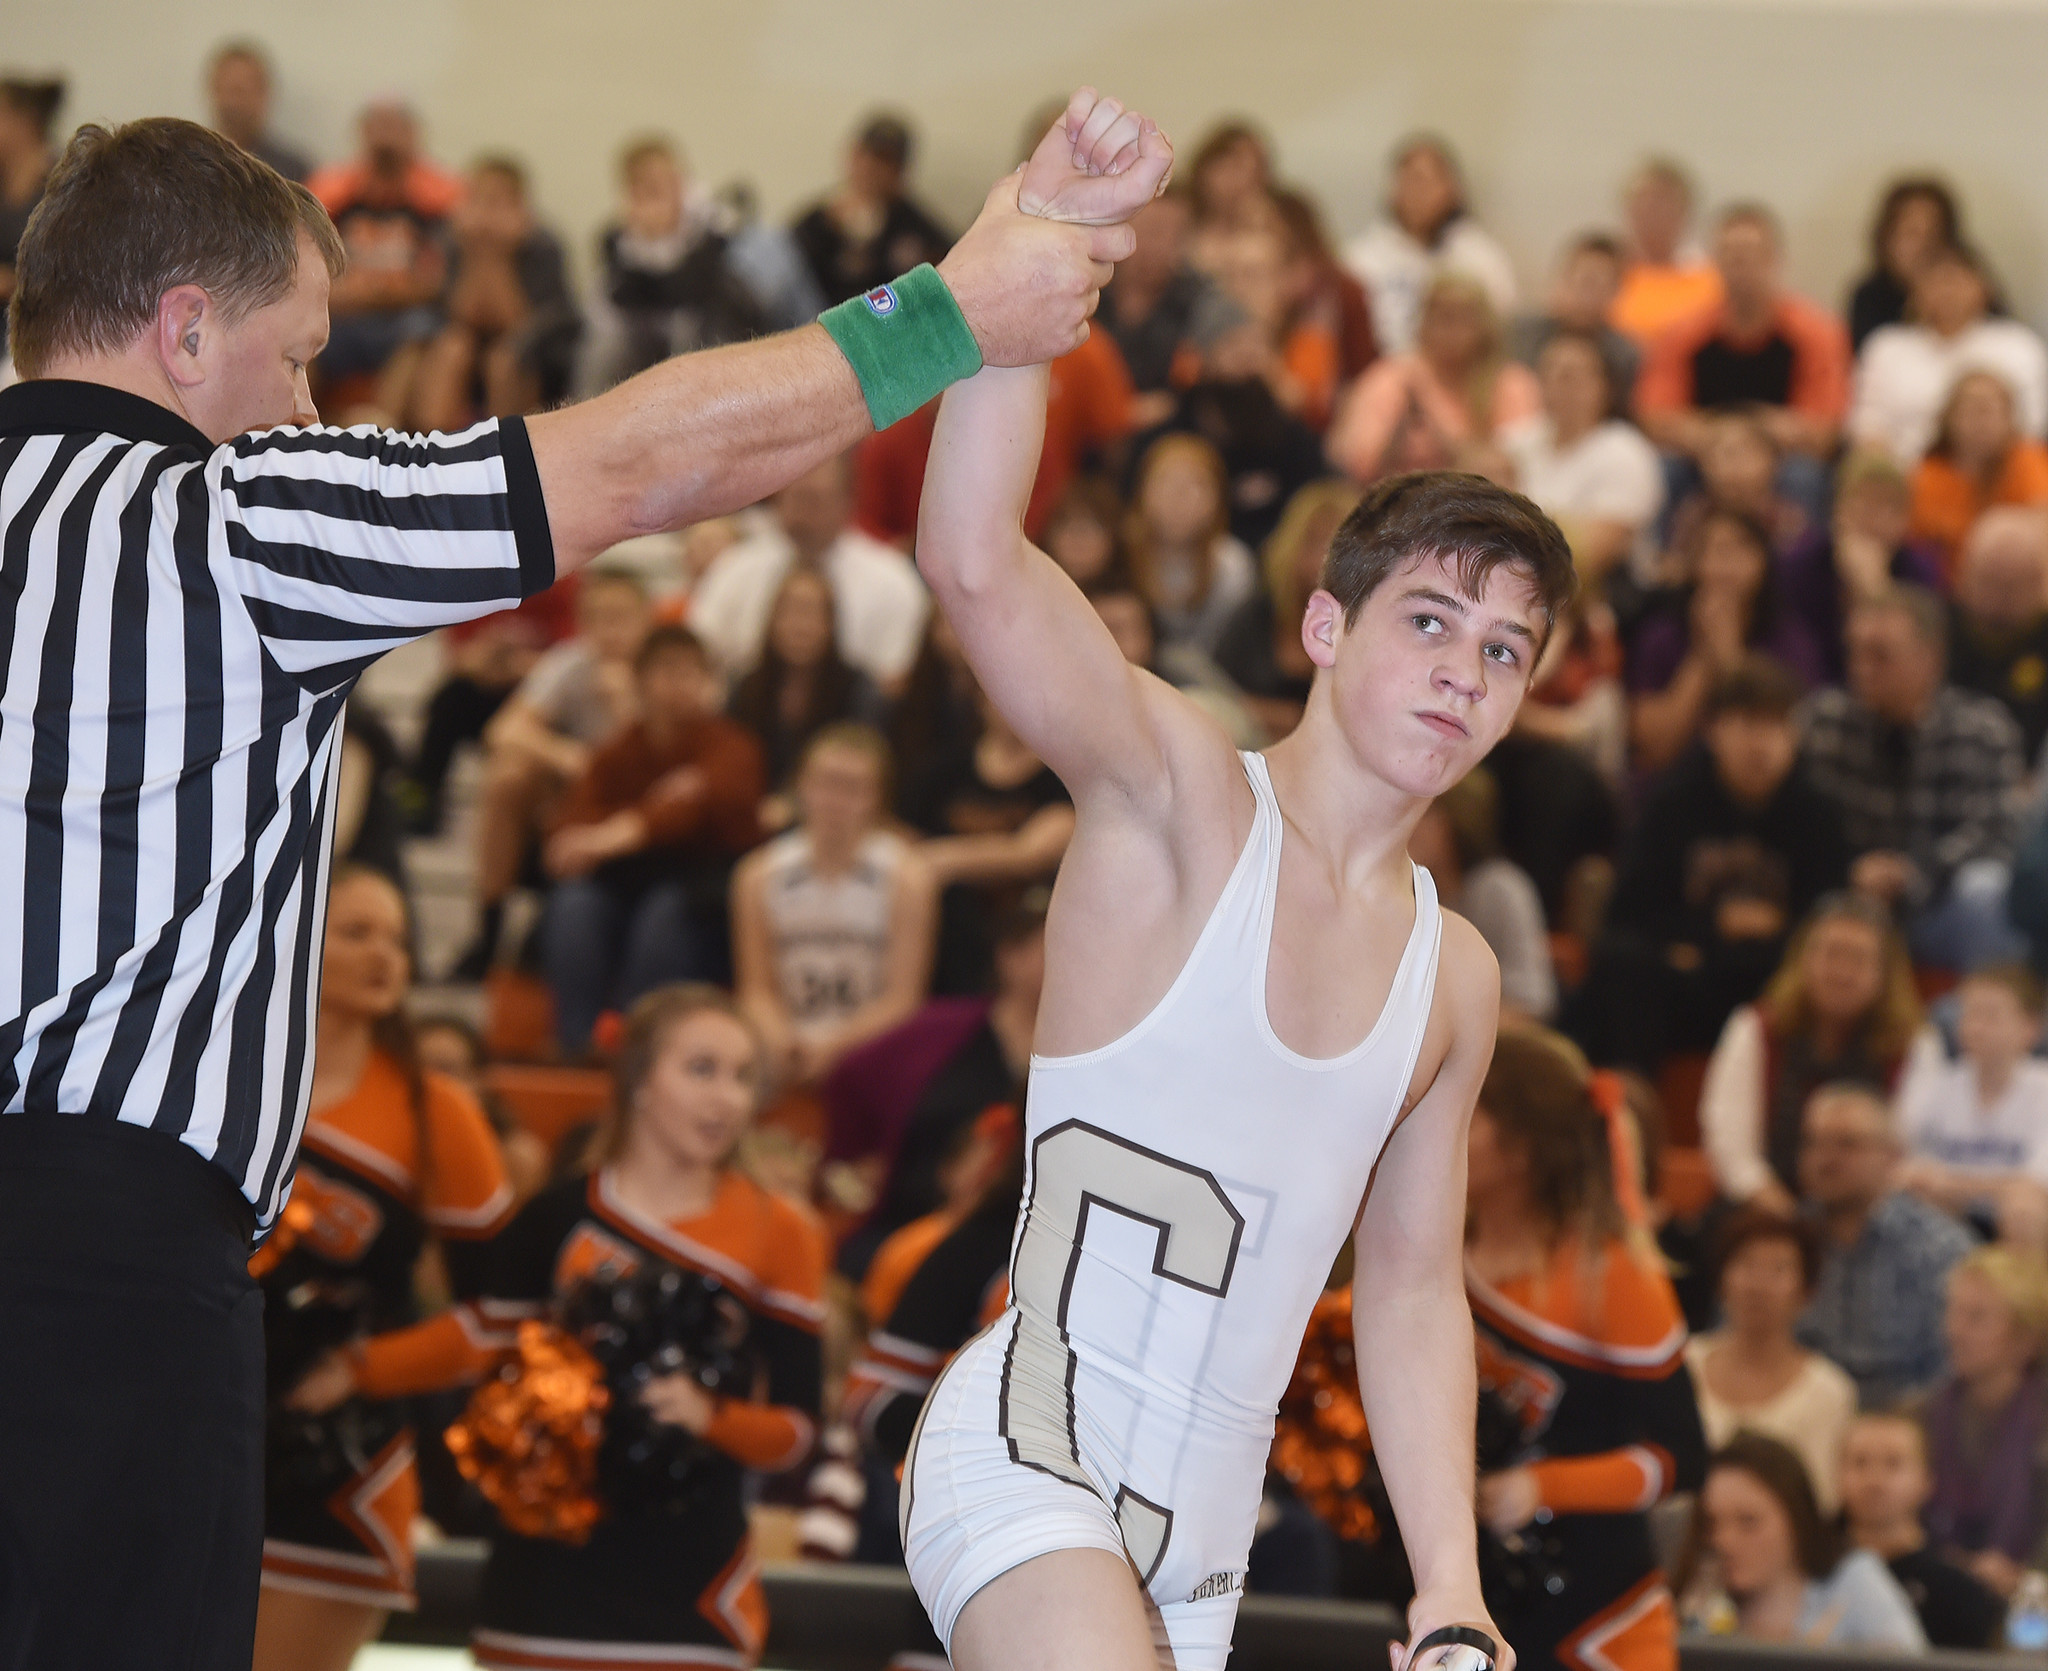 PICTURES: This week's Lehigh Valley high school wrestling rankings